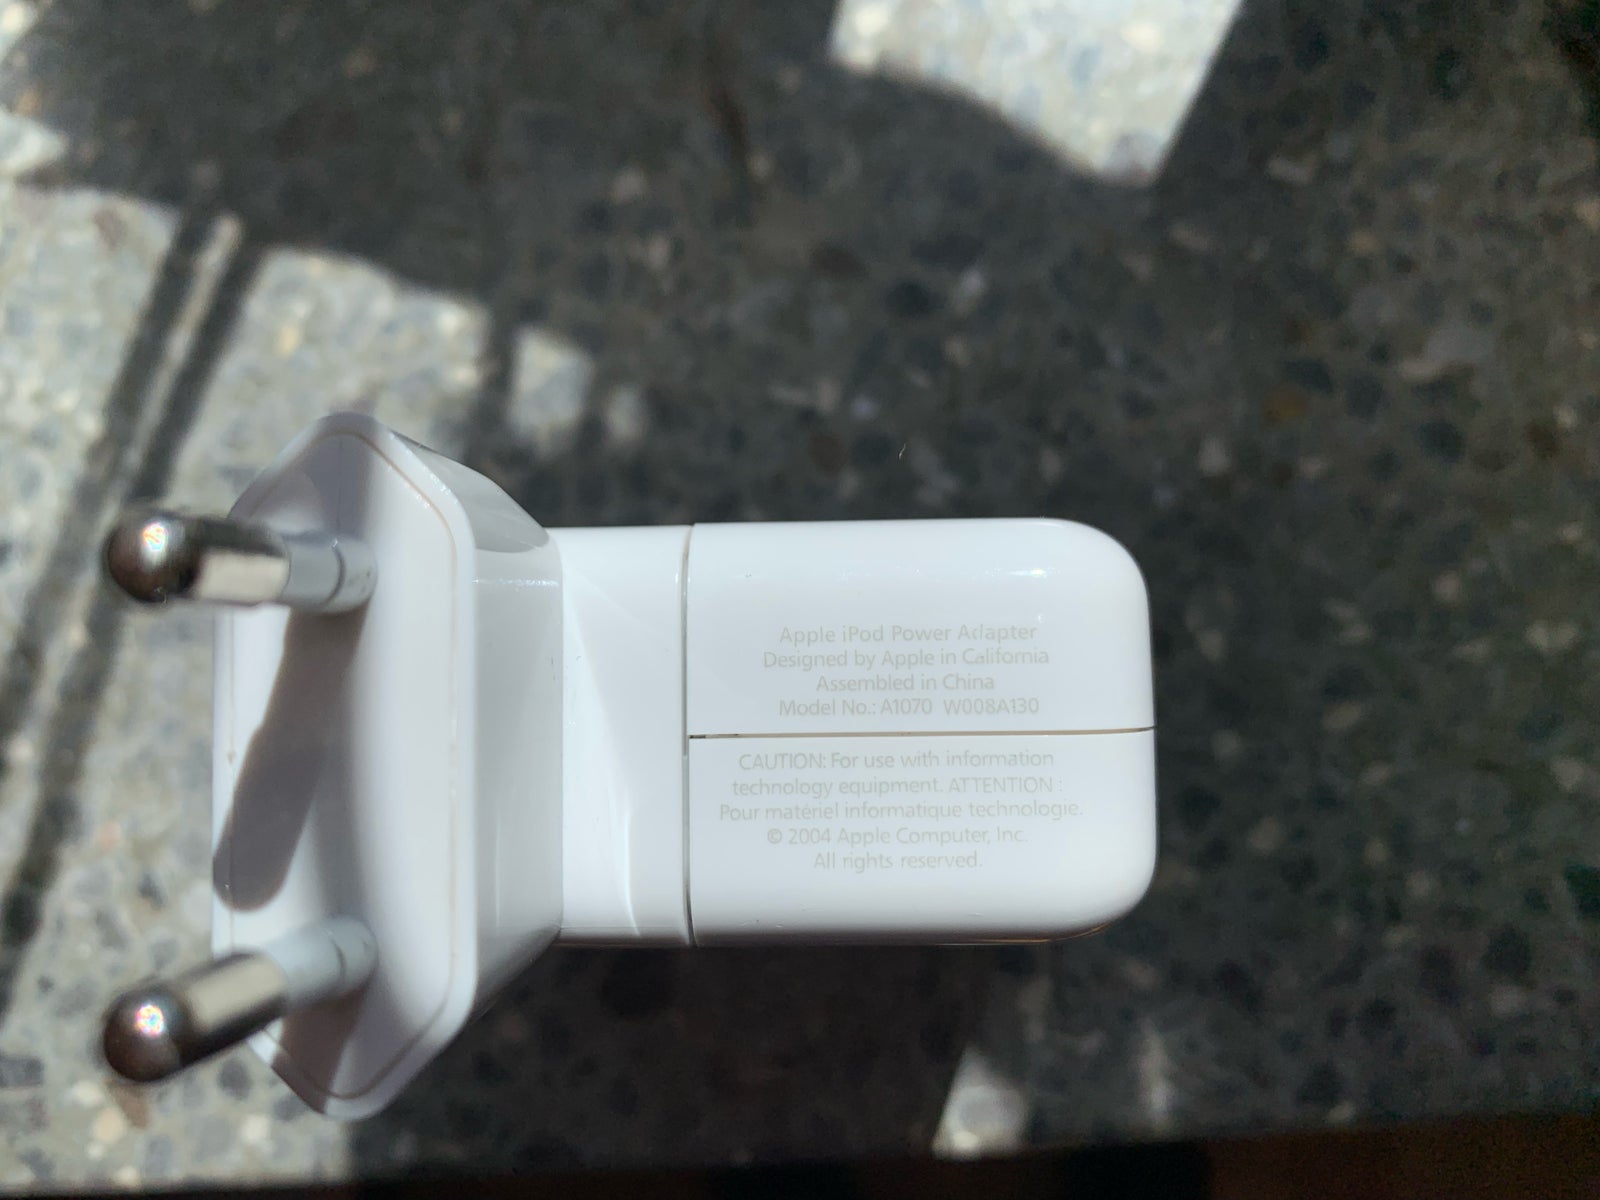 Oplader, Apple A1070 ipad classic Power Adapter, Perfekt